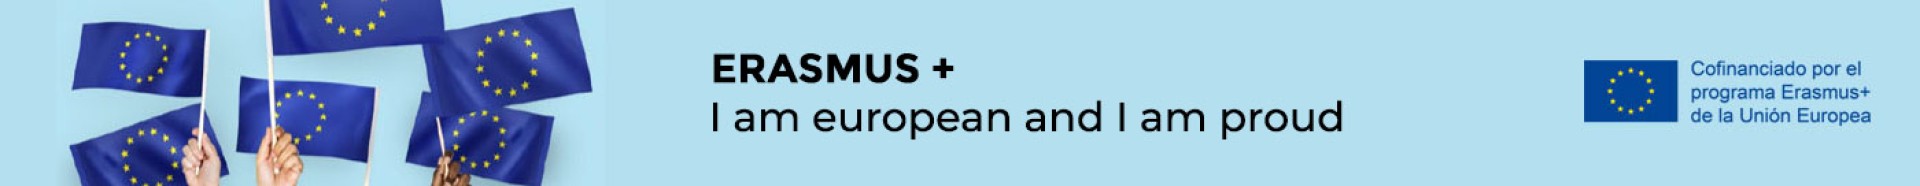 ERASMUS+. I am european and I am proud